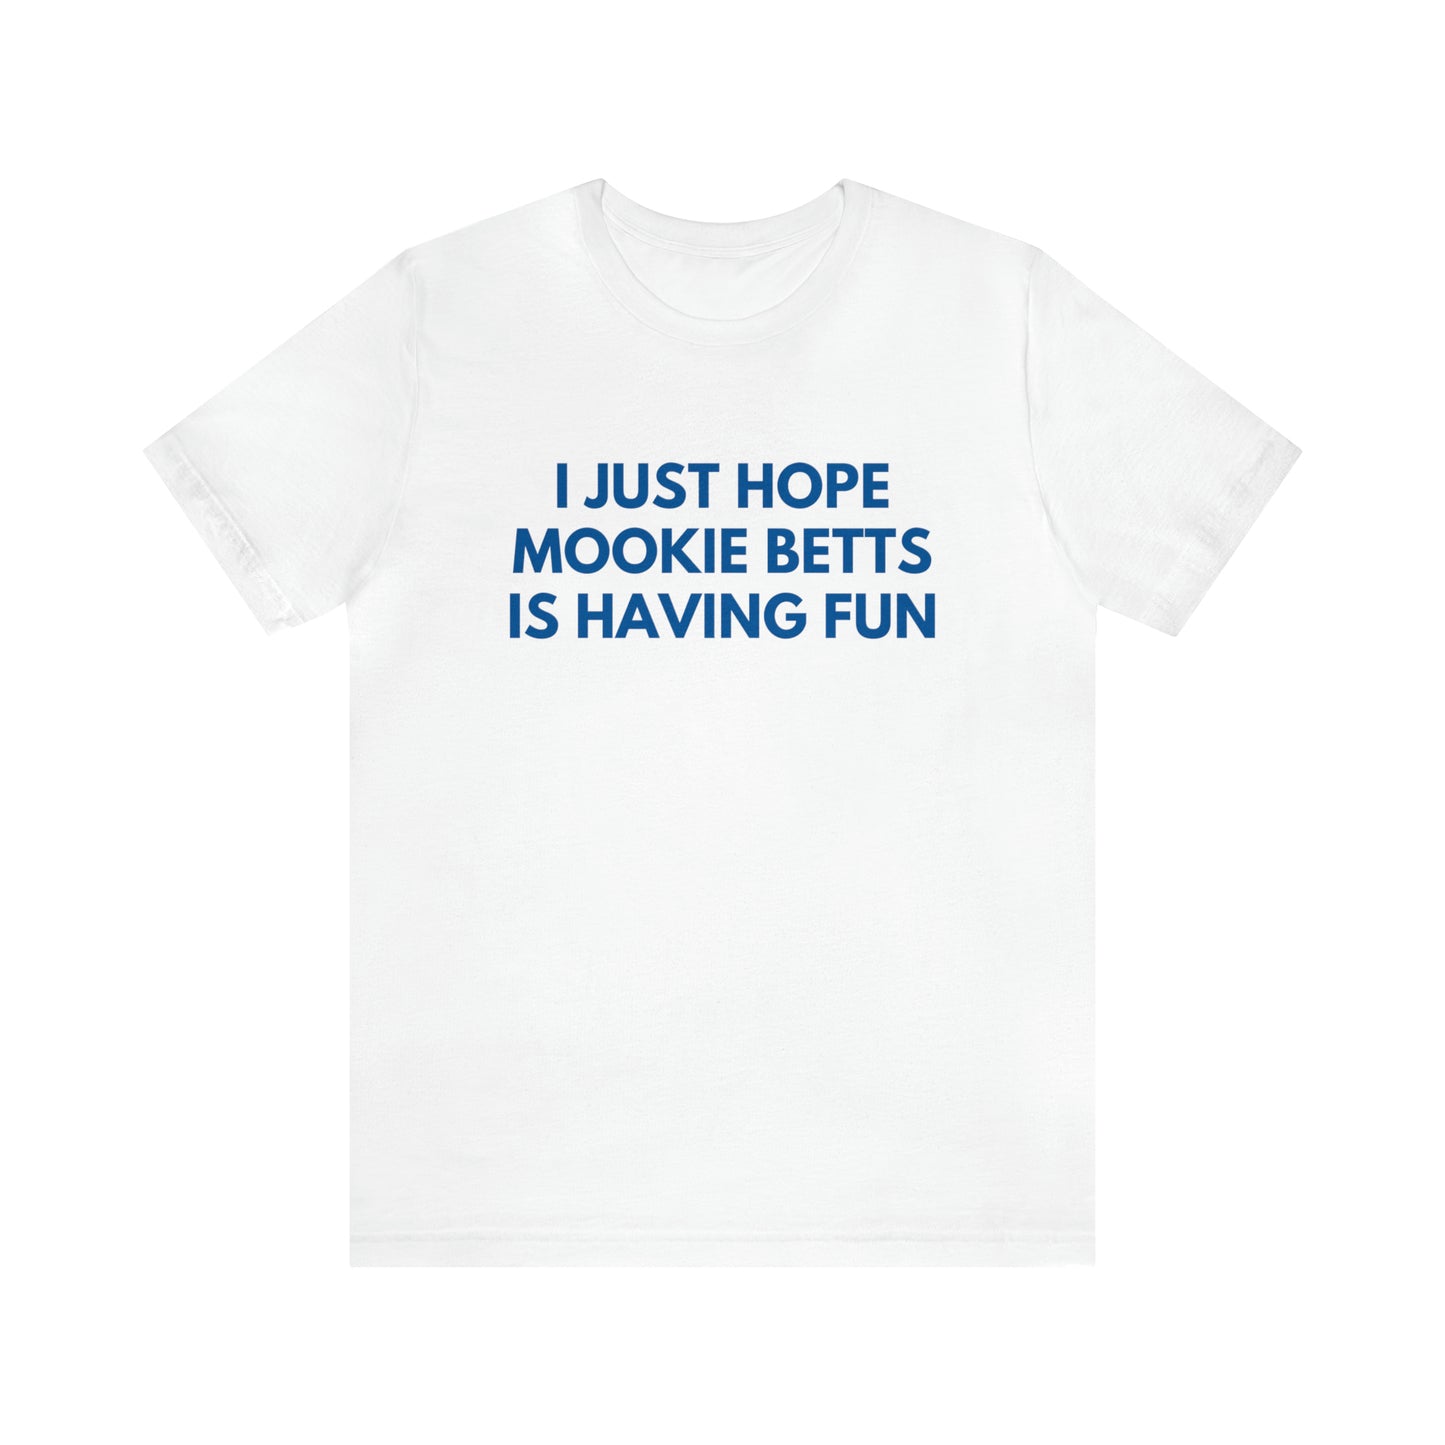 Mookie Betts Having Fun - Unisex T-shirt